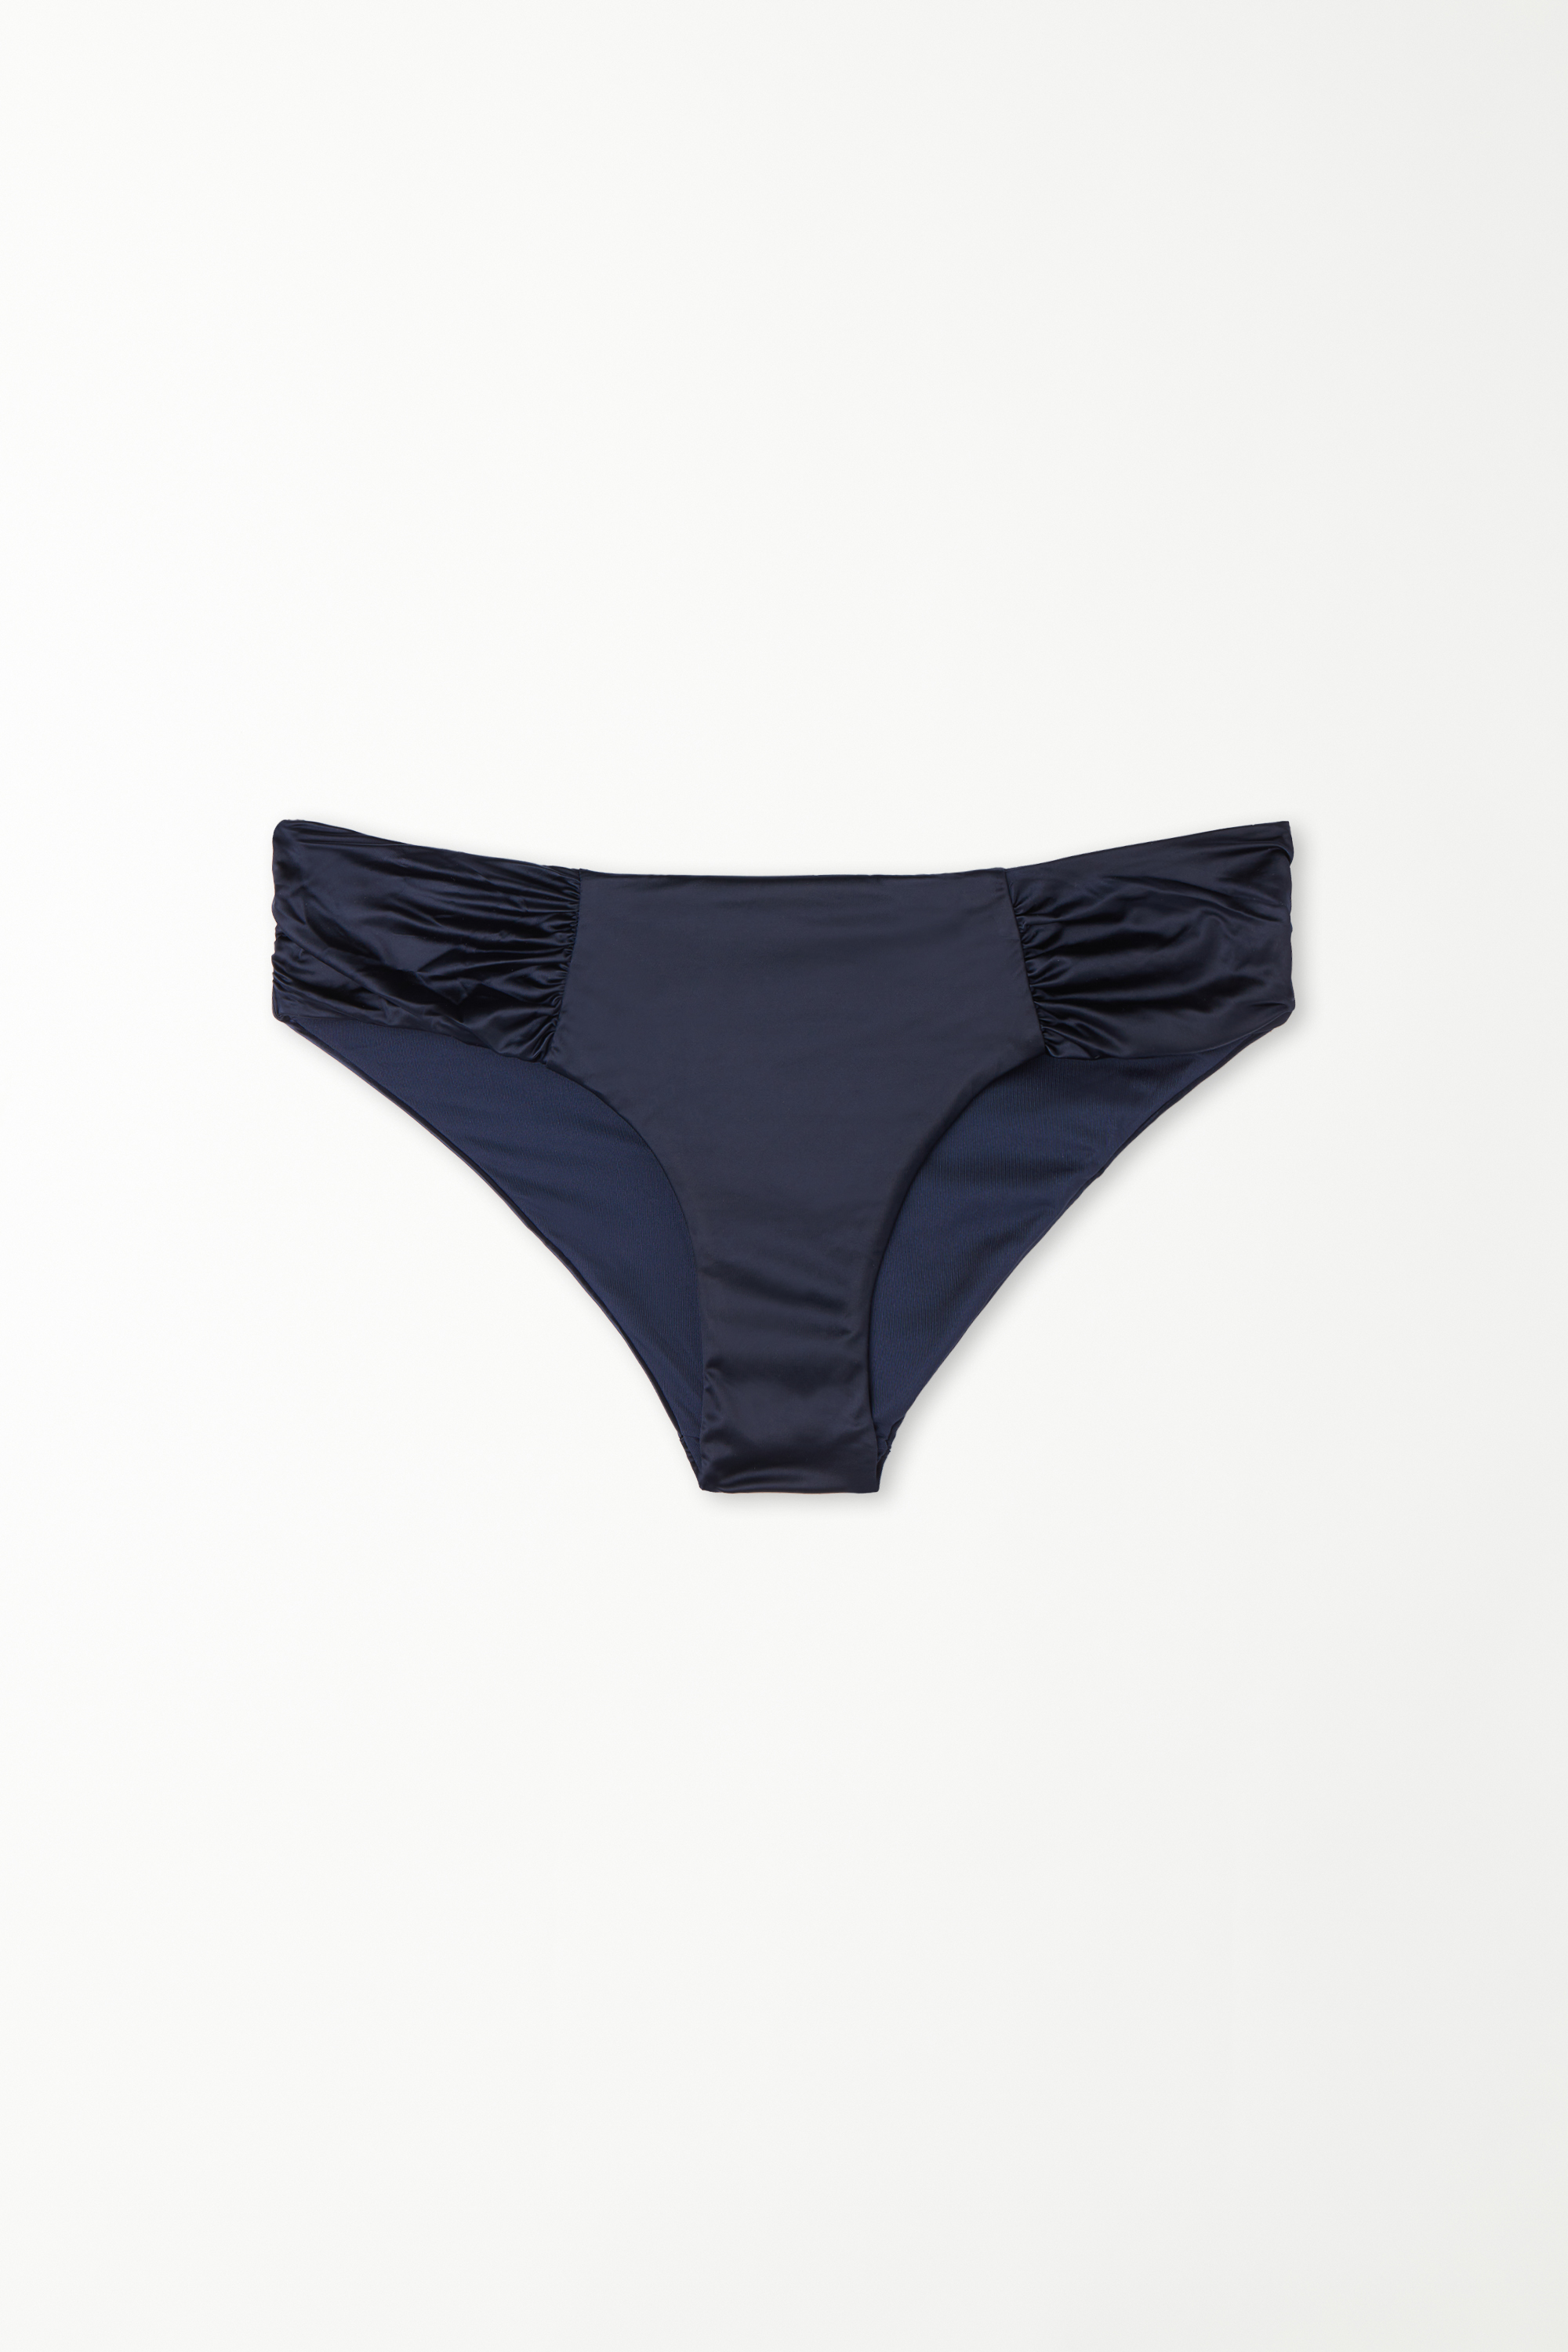 Shiny Sea Blue High-Cut Bikini Bottom with Gathering